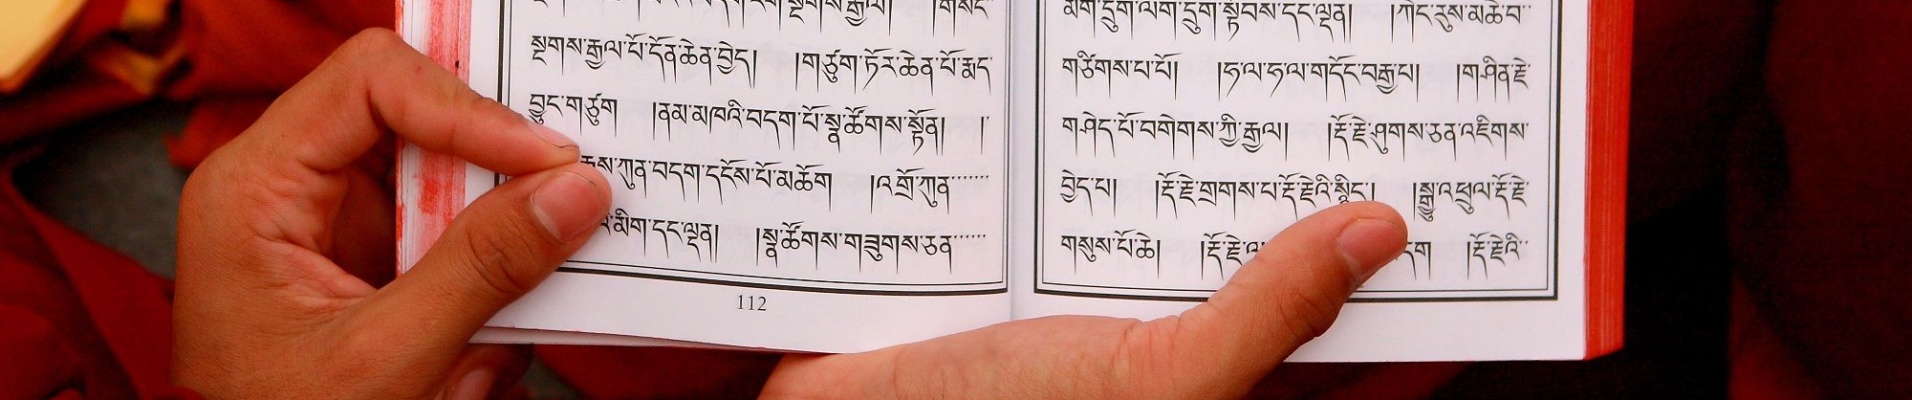 Moine lisant, Népal